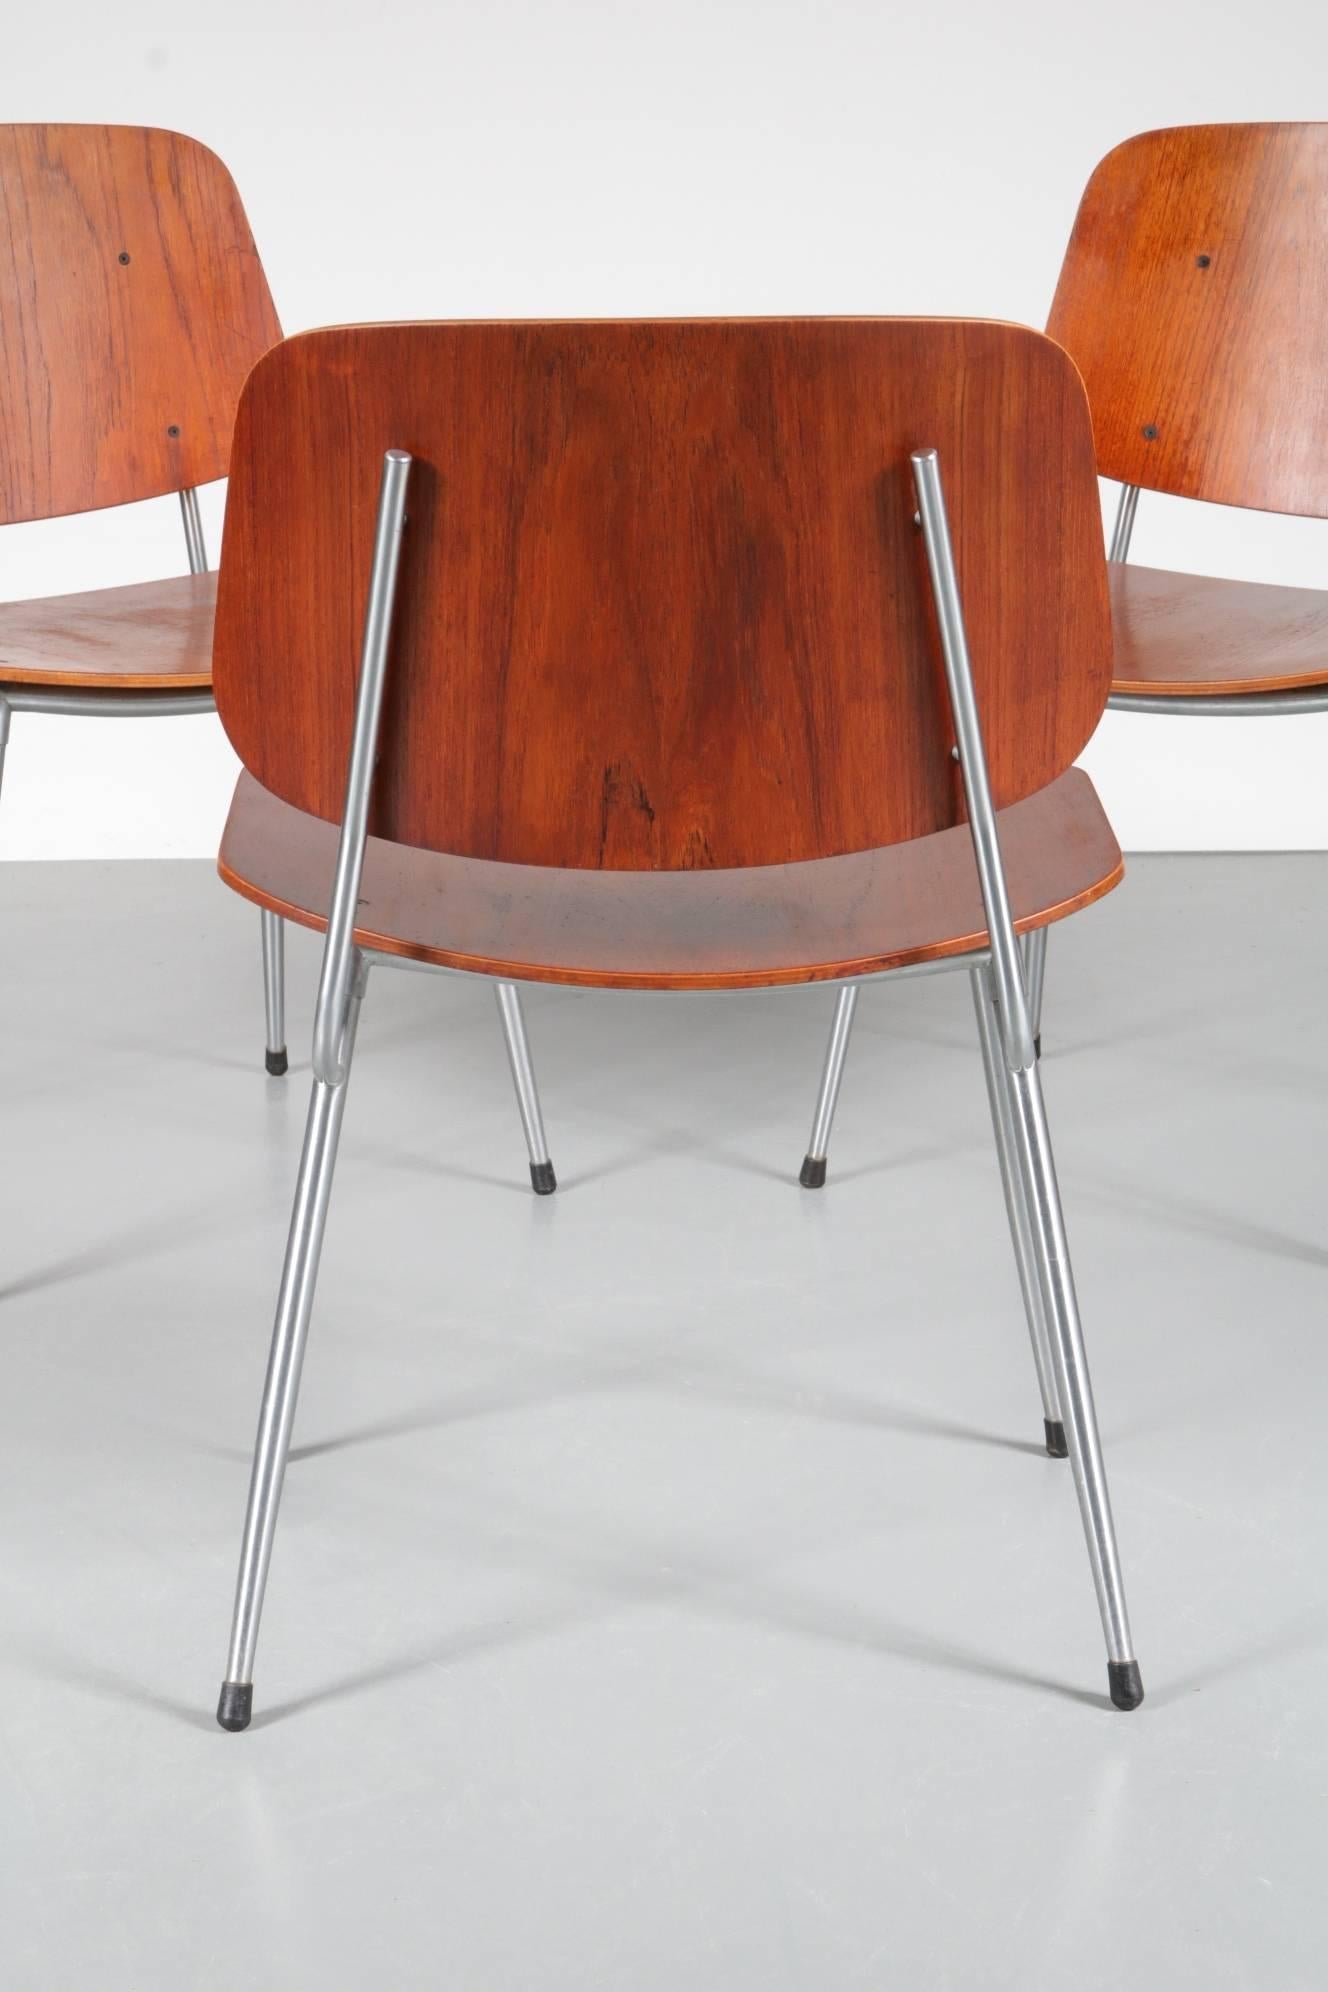 Mid-Century Modern Plywood Dining Chair by Børge Mogensen for Søborg Møbelfabrik, Denmark, 1953